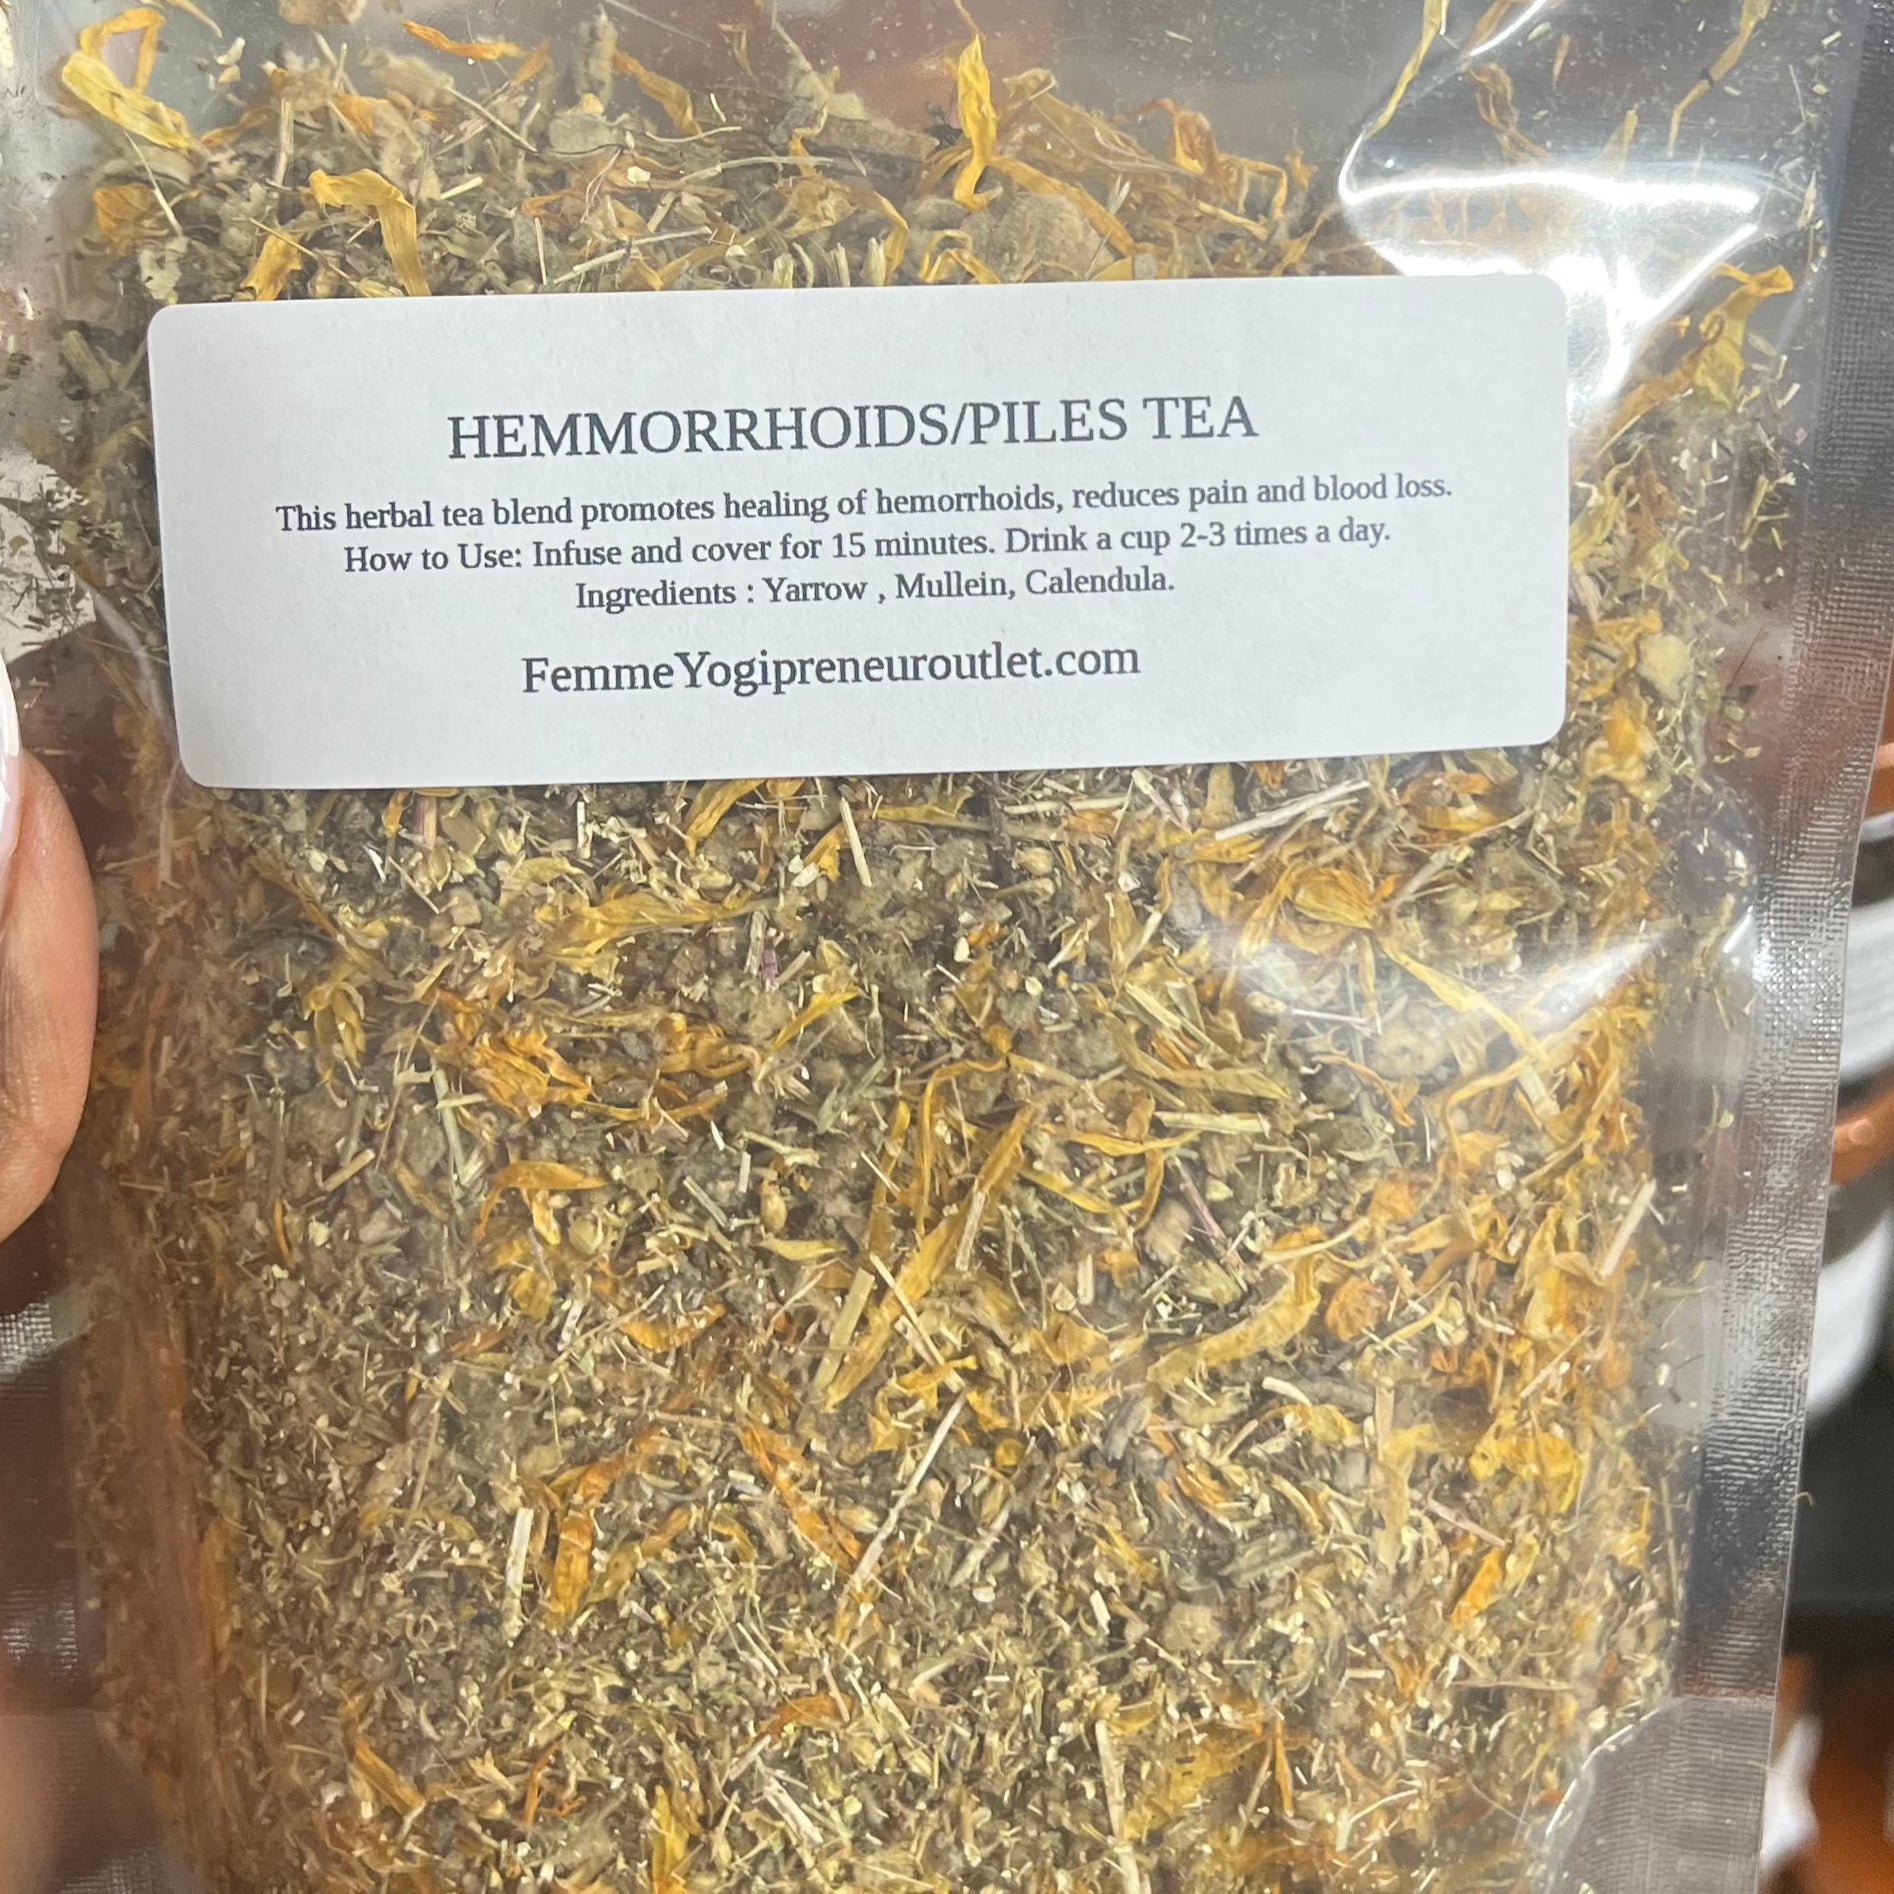 Hemorrhoids tea